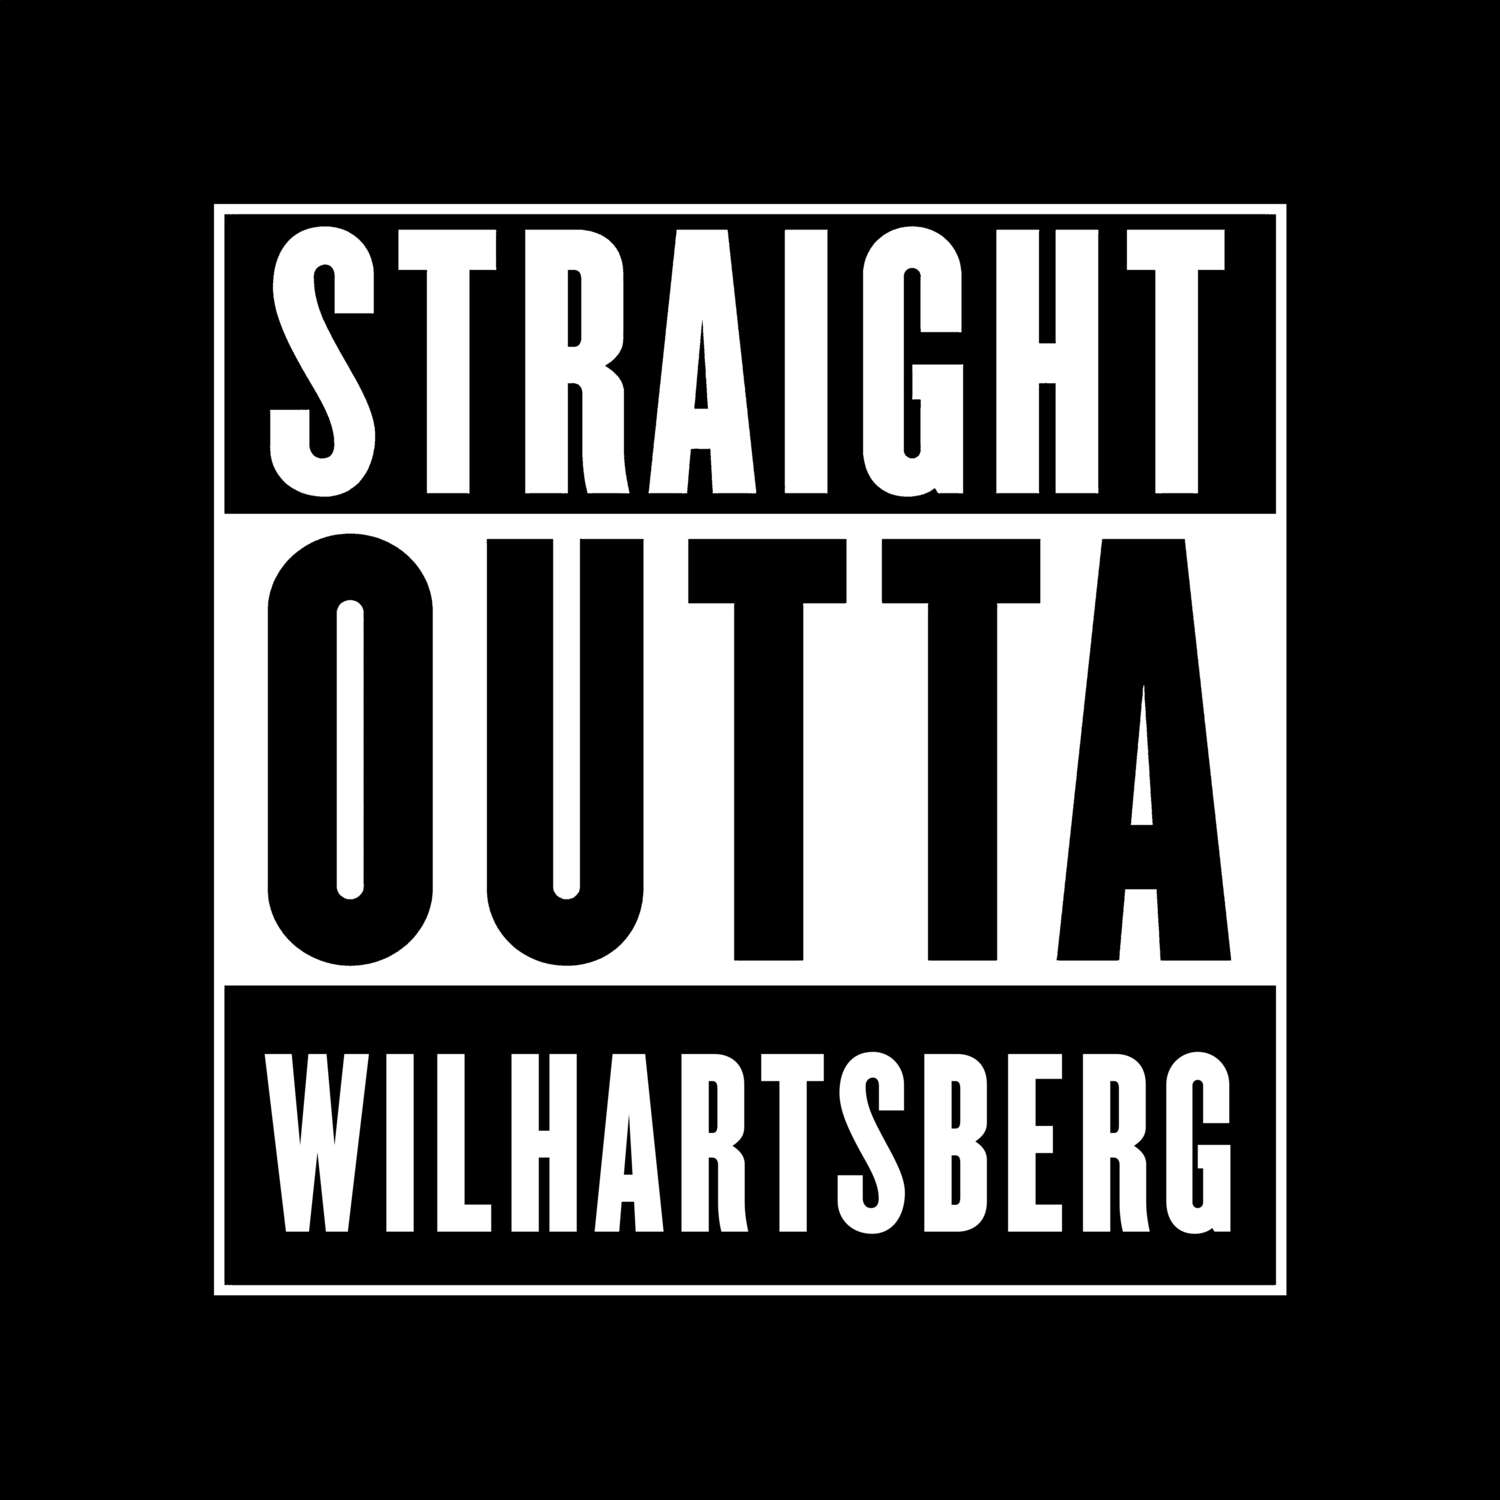 Wilhartsberg T-Shirt »Straight Outta«